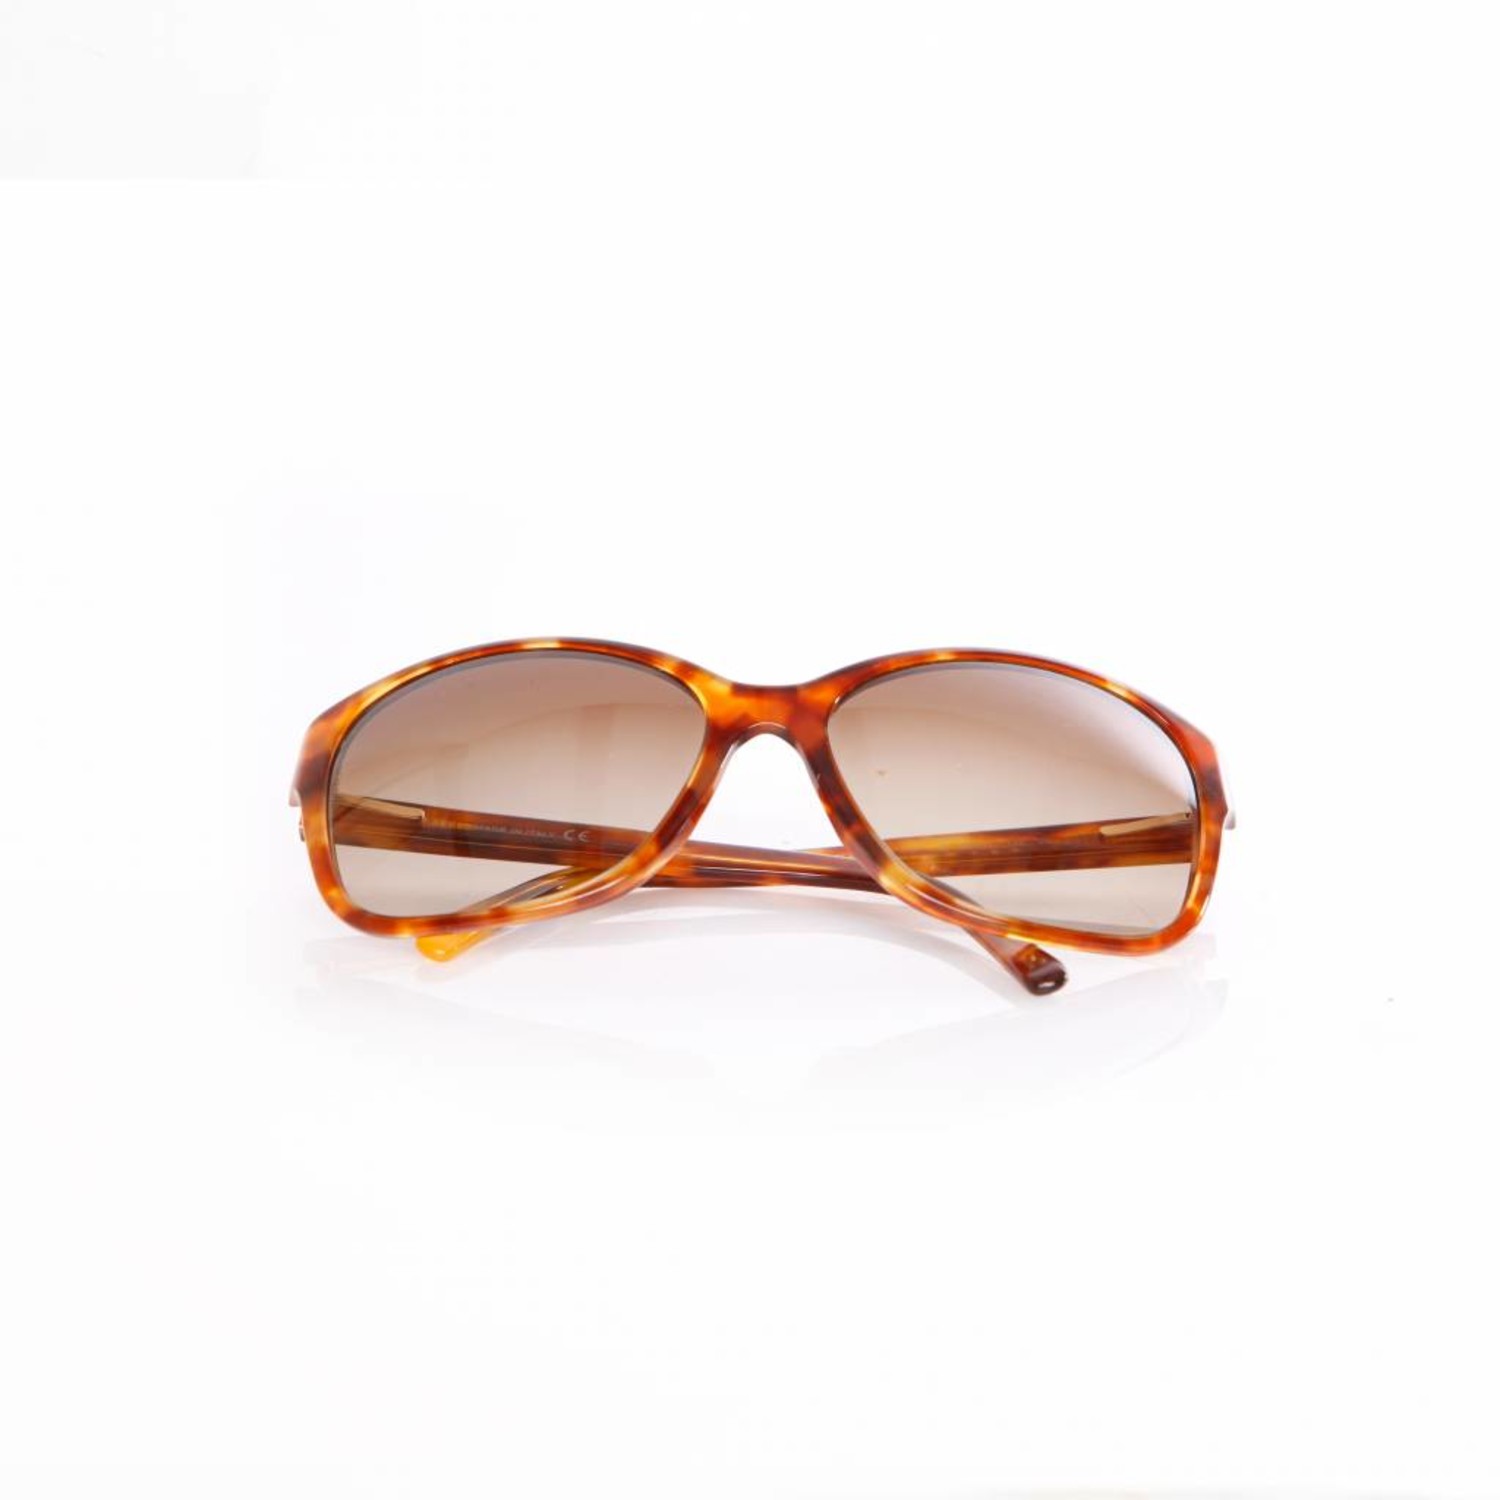 chanel orange sunglasses